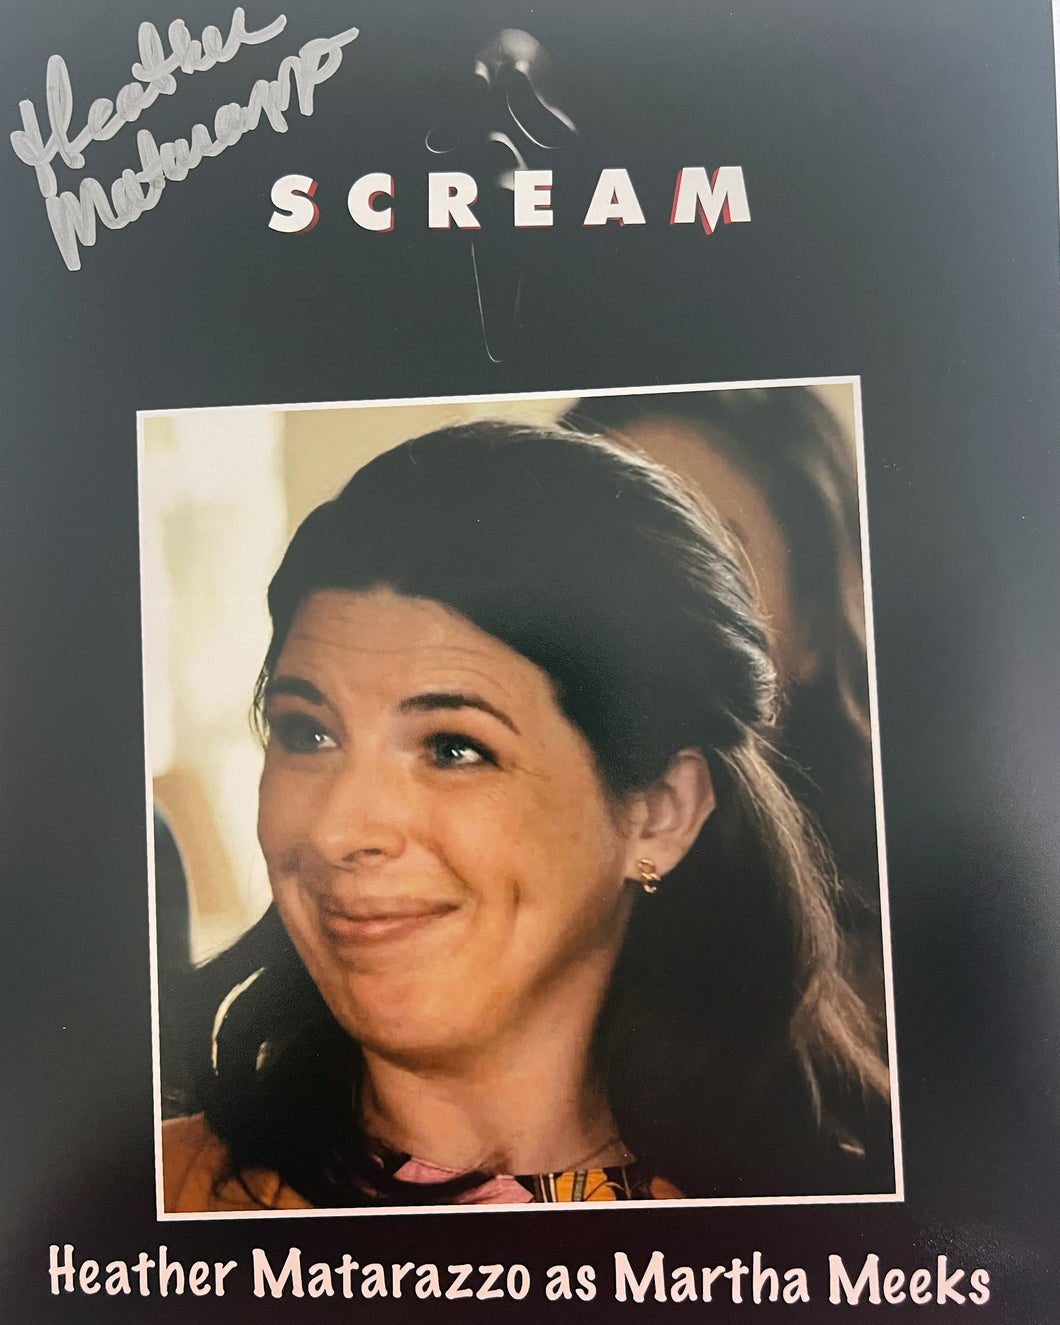 Heather Matarazzo signed Scream 8x10